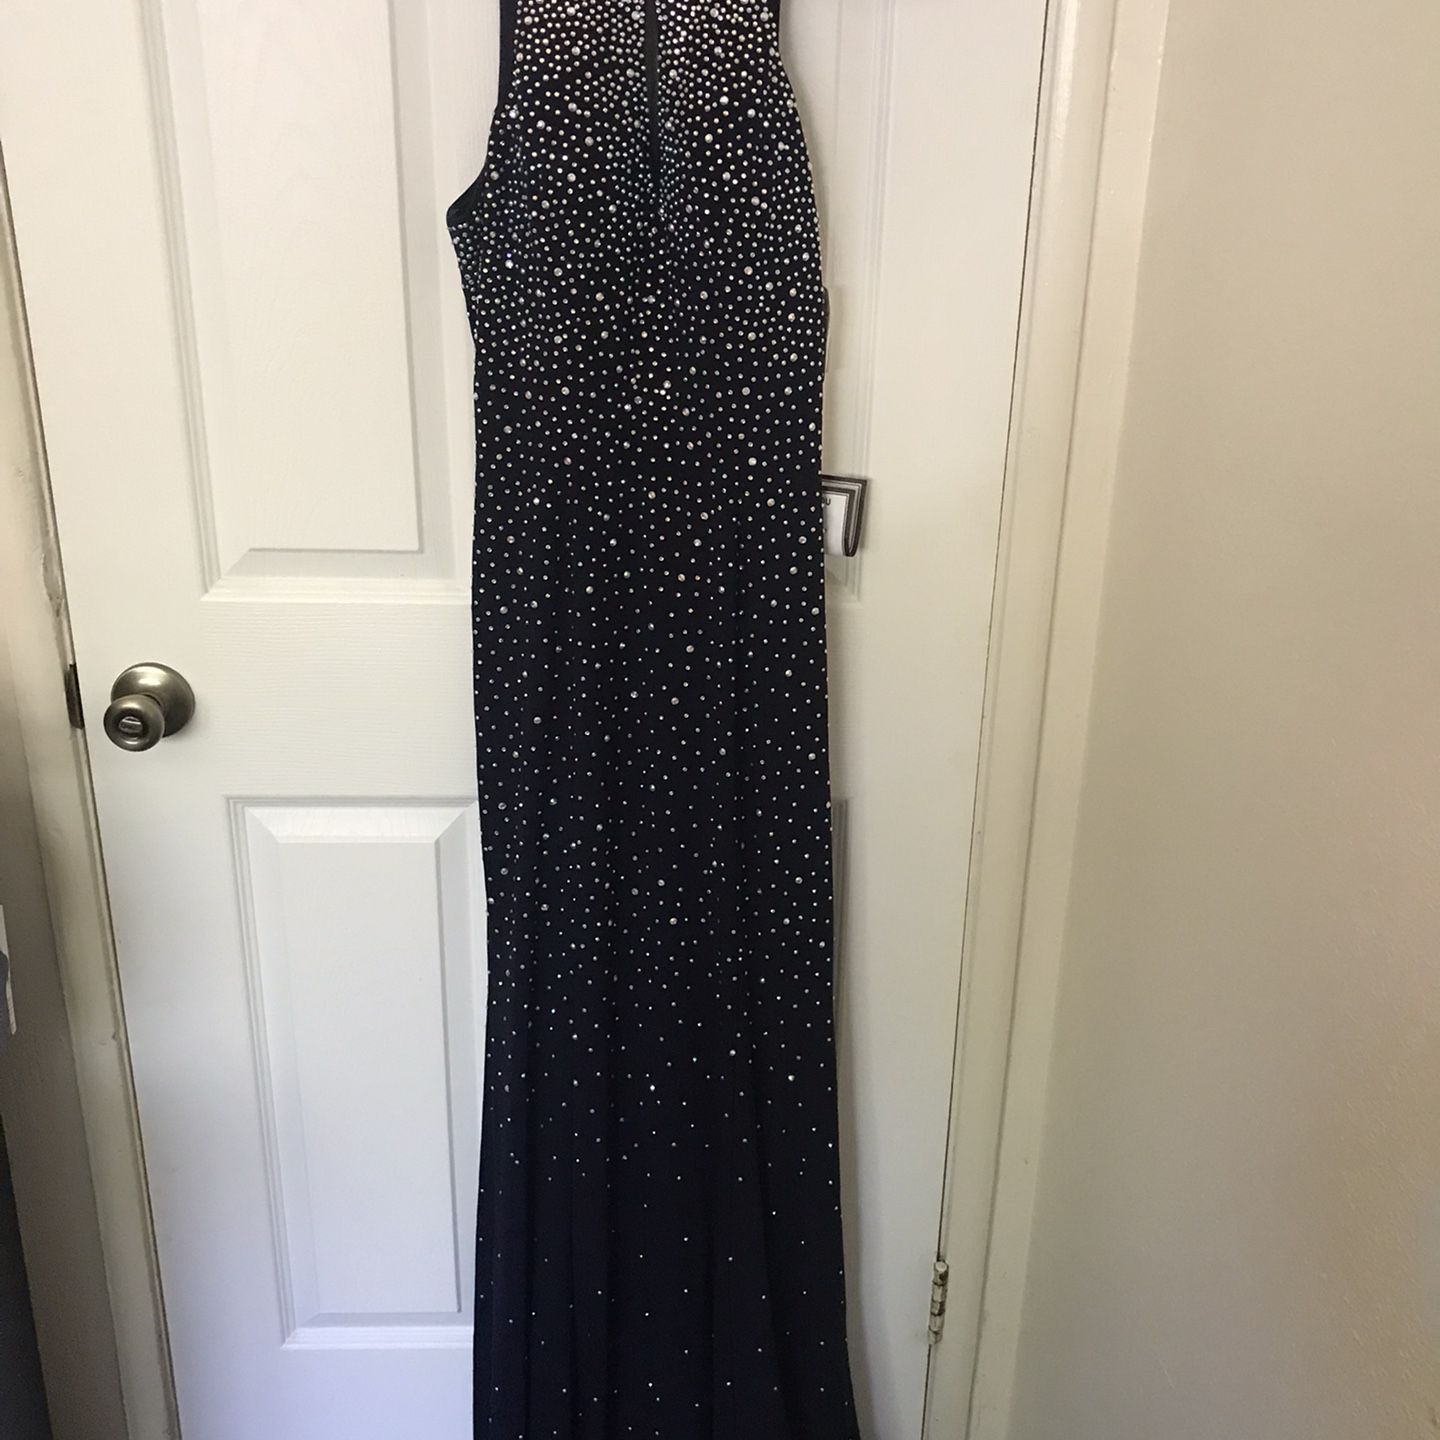  Prom/Wedding Dress Navy Blue  New WT Size 4